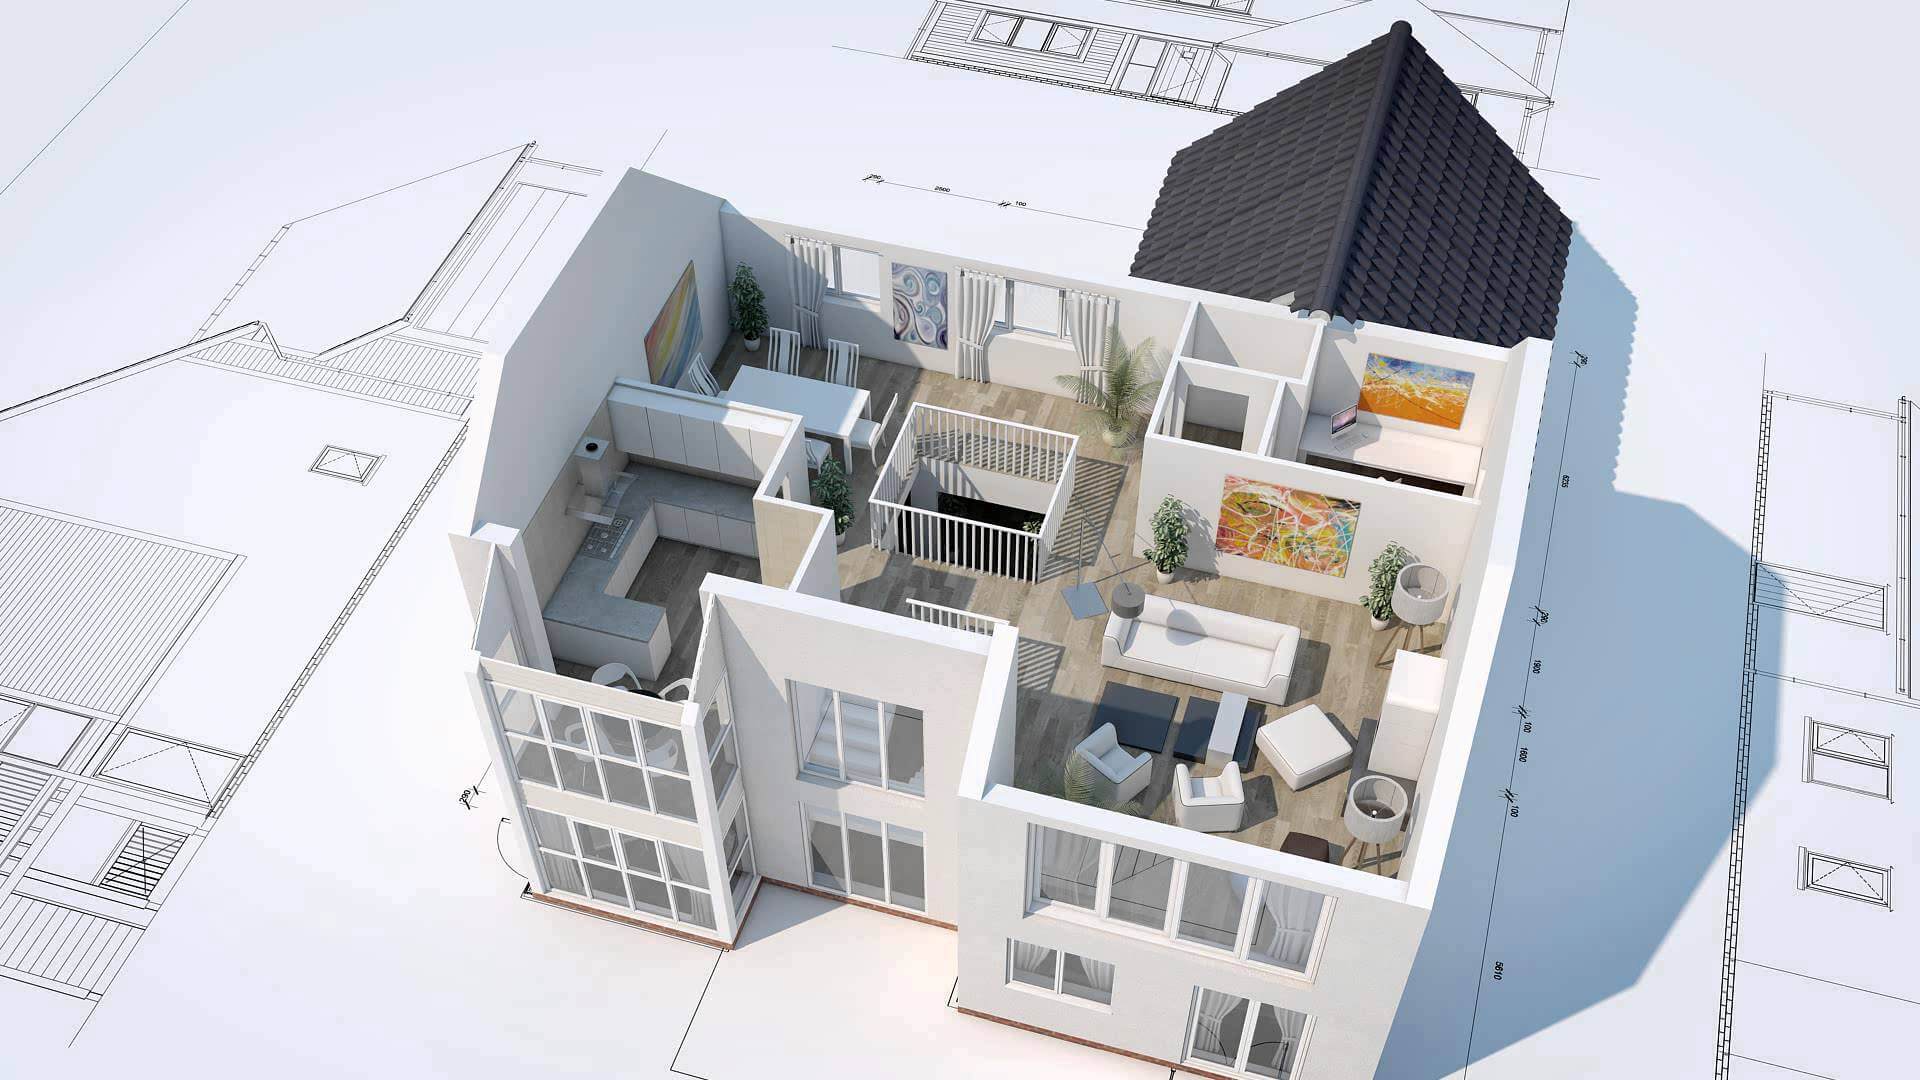 Planning for a building. Архитектурная визуализация 3ds Max. Проектирование домов. Макет дома. Макет планировки дома.